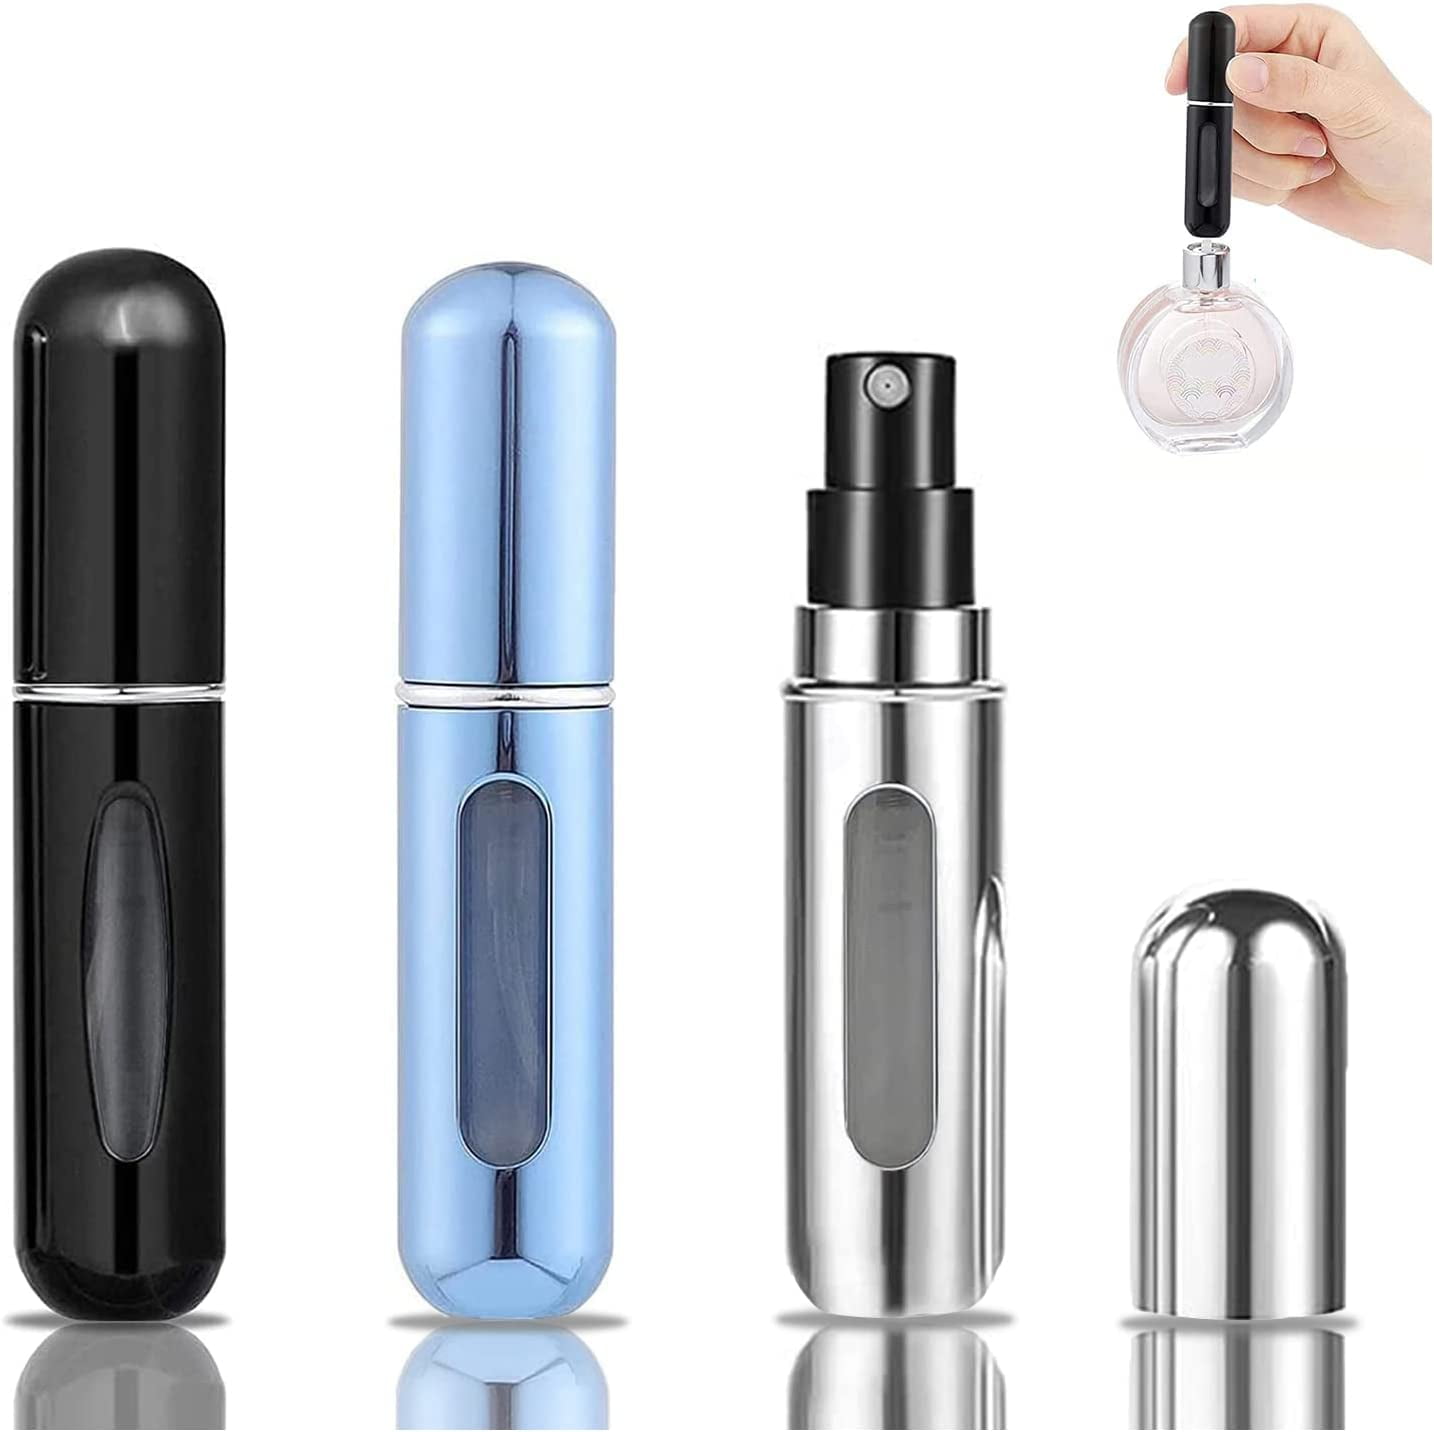 1pc 5ml Atomizer Bottle, Refillable Portable Miniature Hand-hold Mist Spray  Bottle For Fragrance, Bottom Refillable